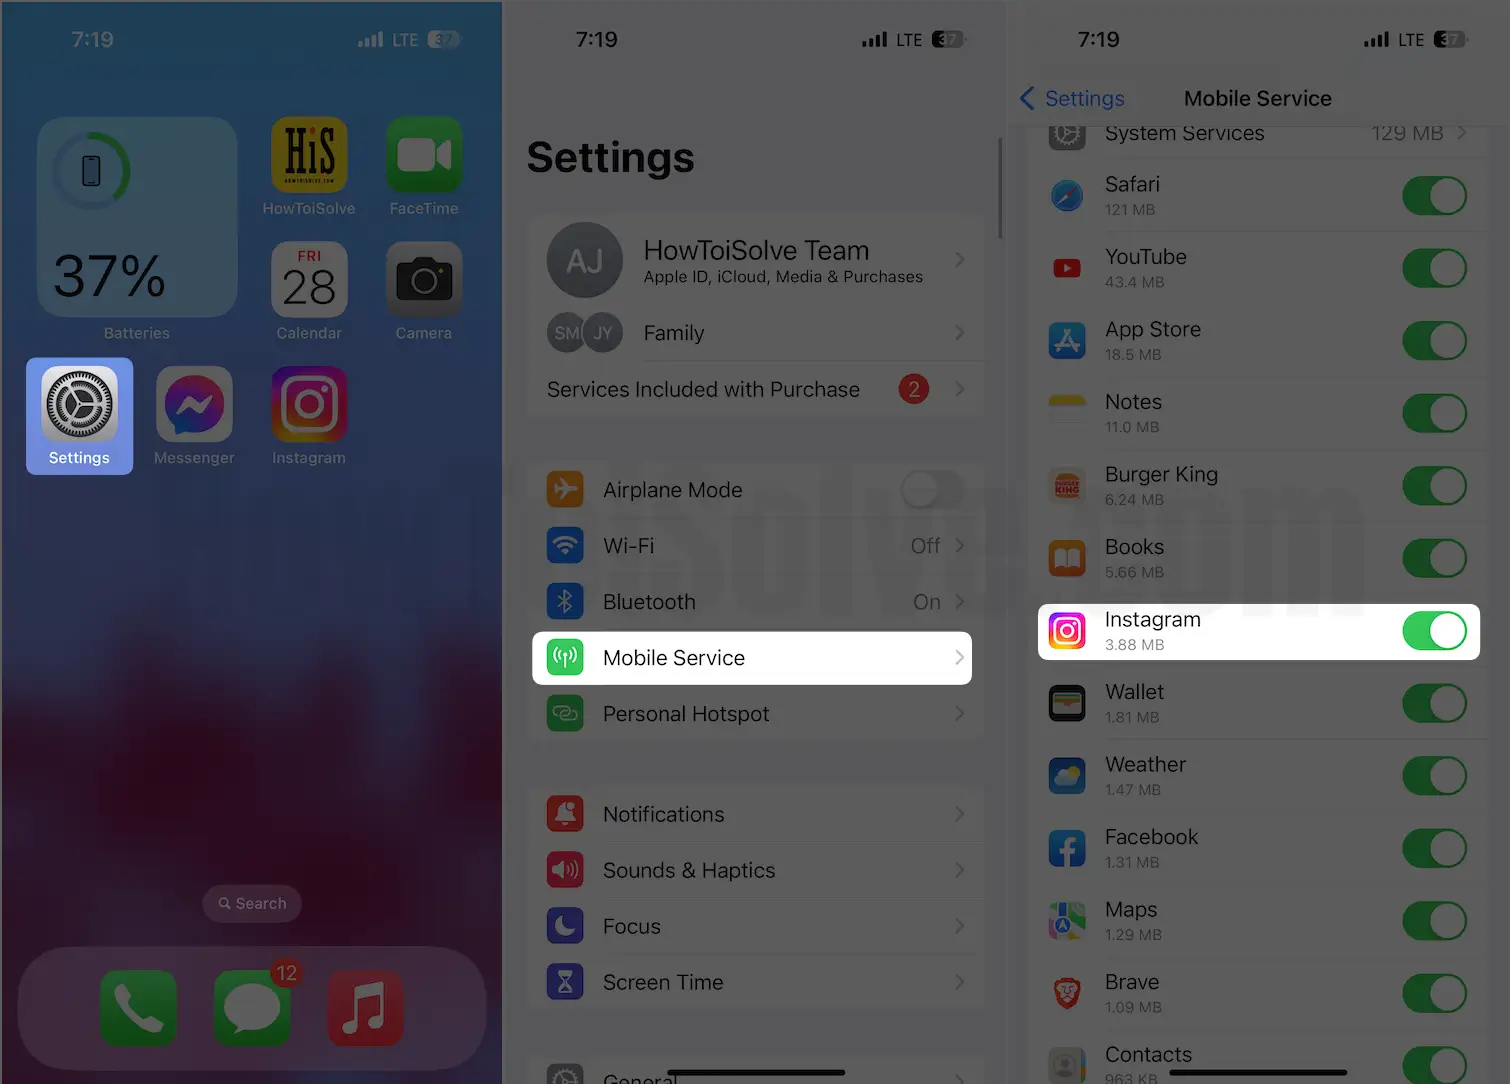 open settings app choose mobile data and turn data on for instagram app on iPhone